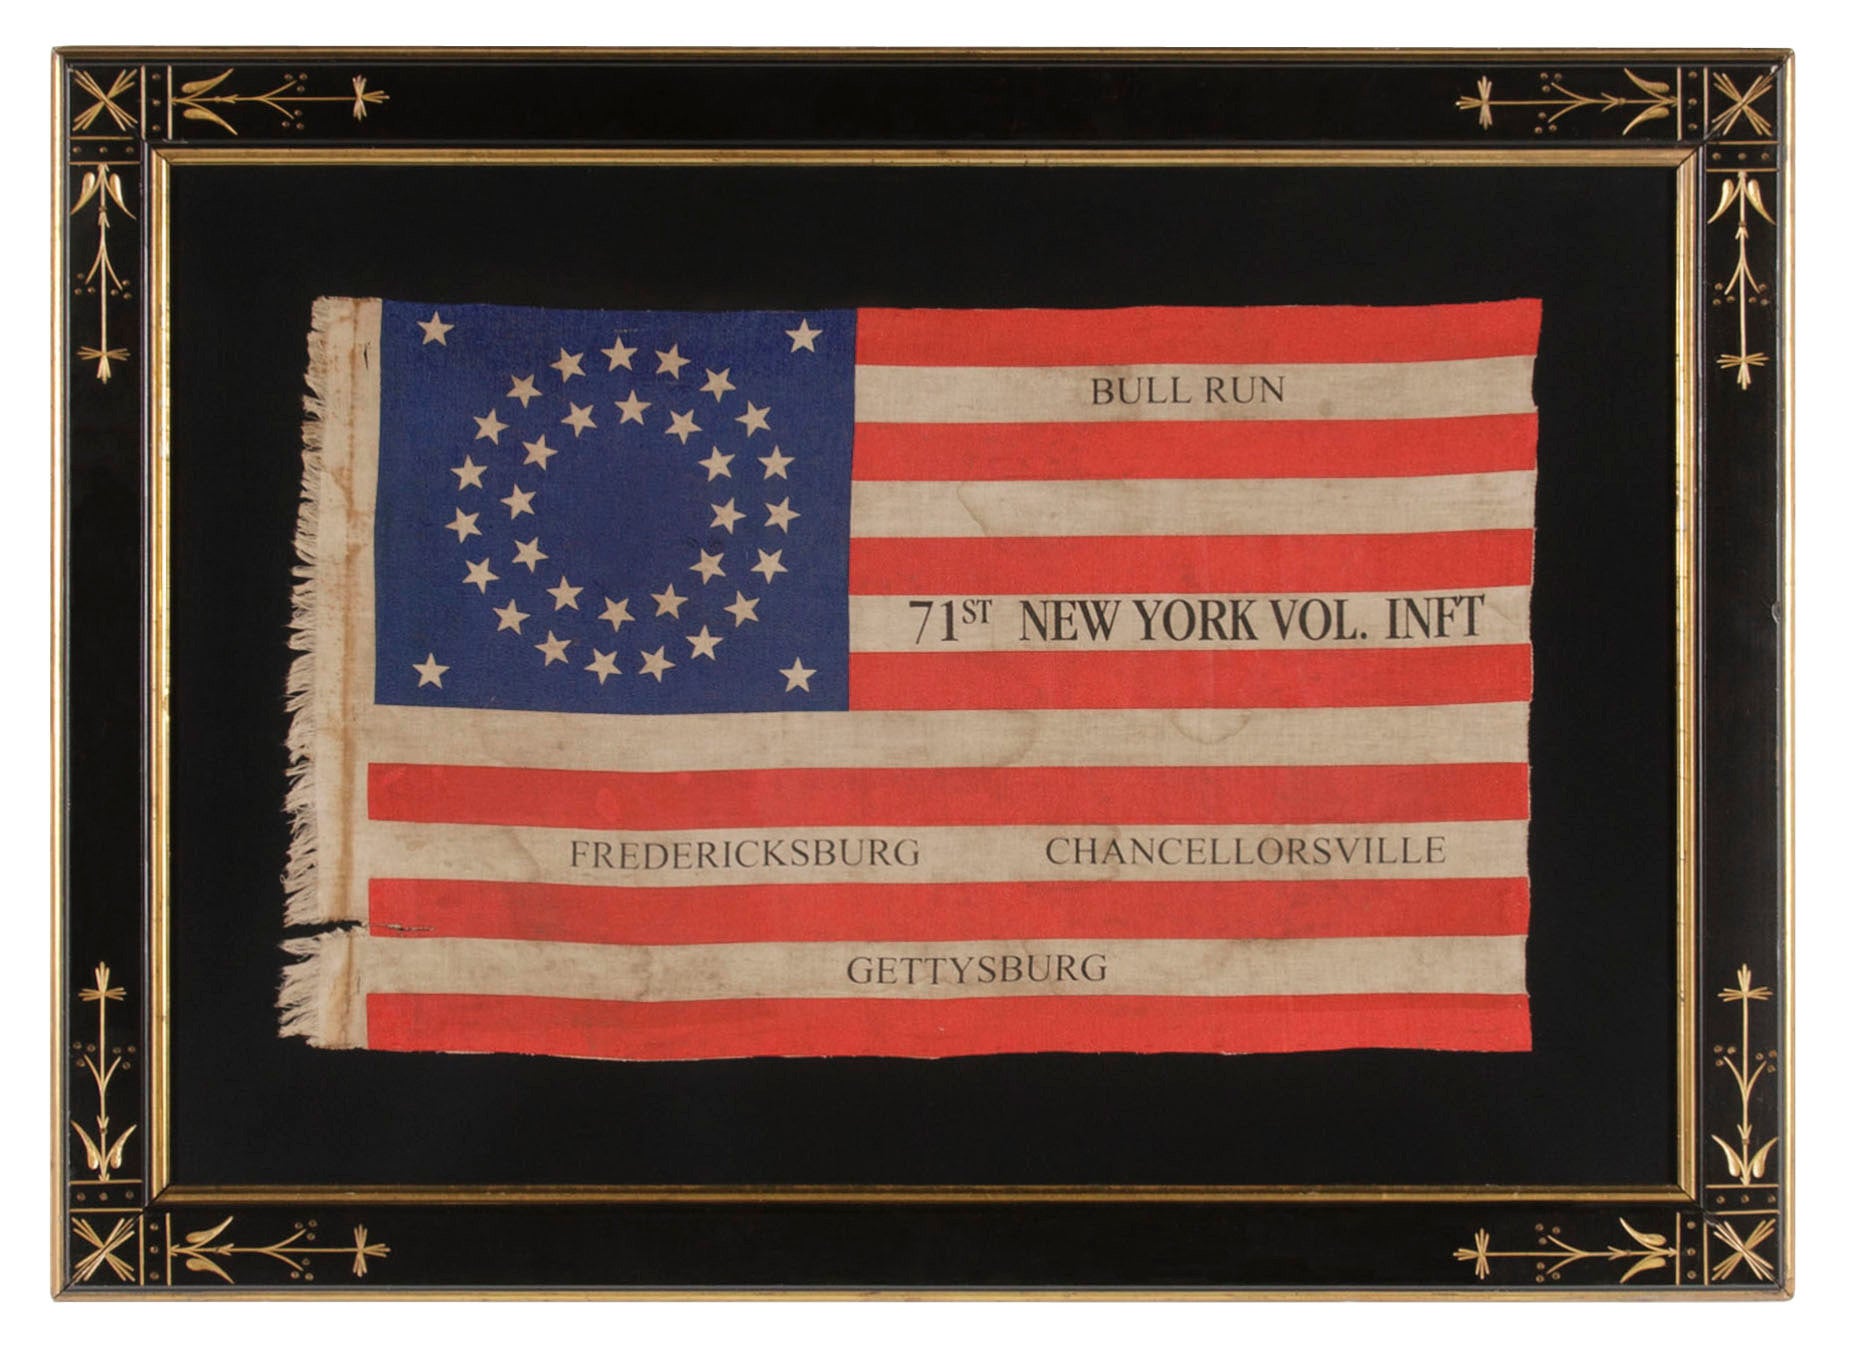 35 Star Antique American Flag, New York 71st Vol. Infantry Reunion, Civil War